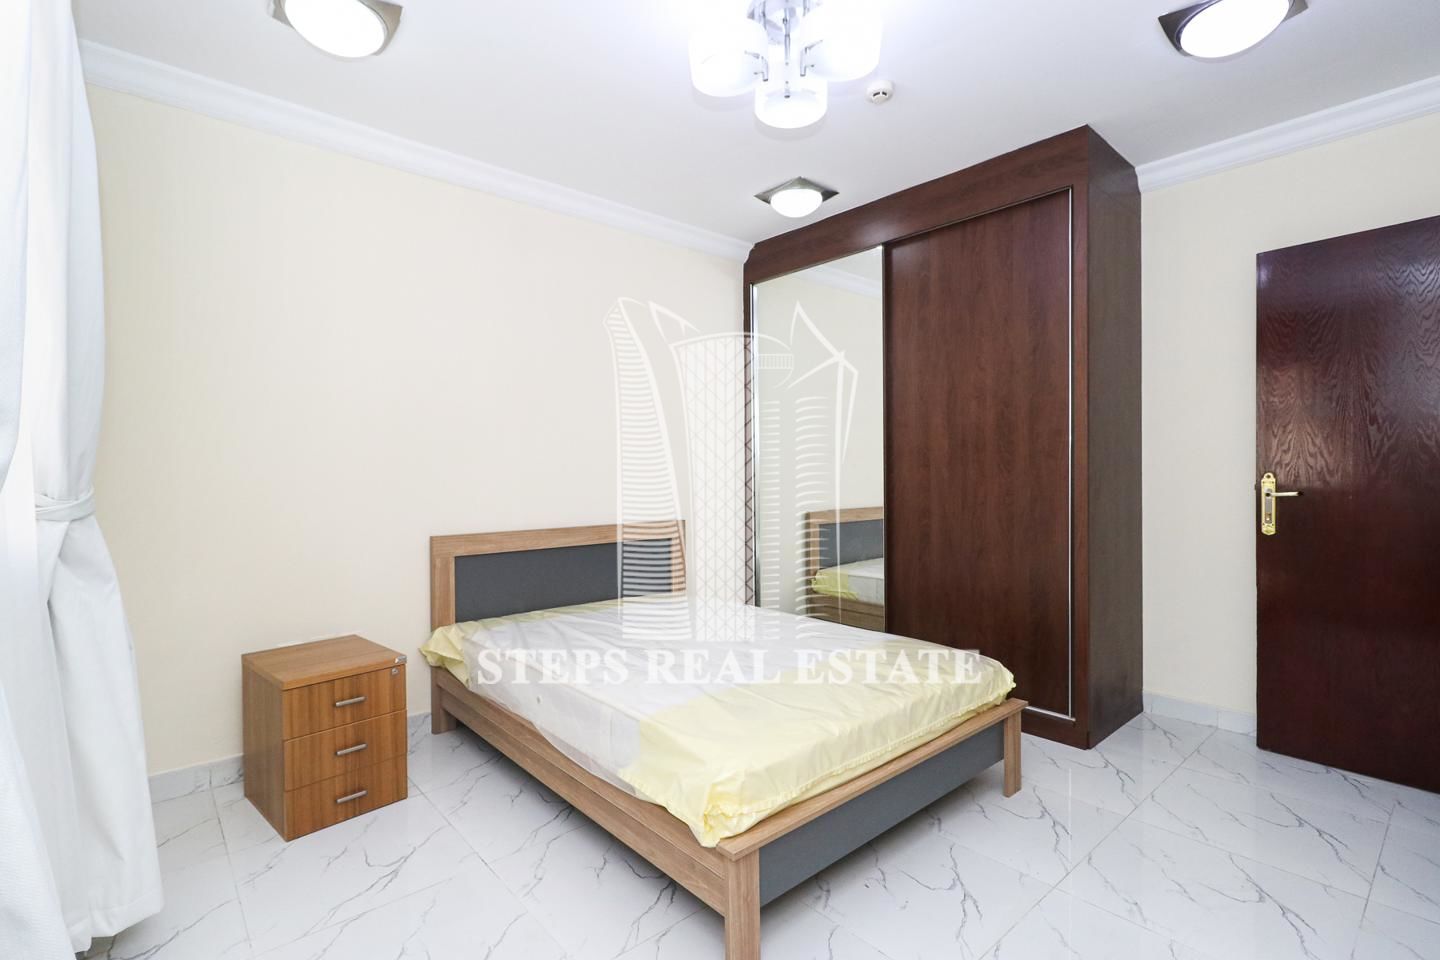 4-Bedroom Fully Furnished Compound Villa